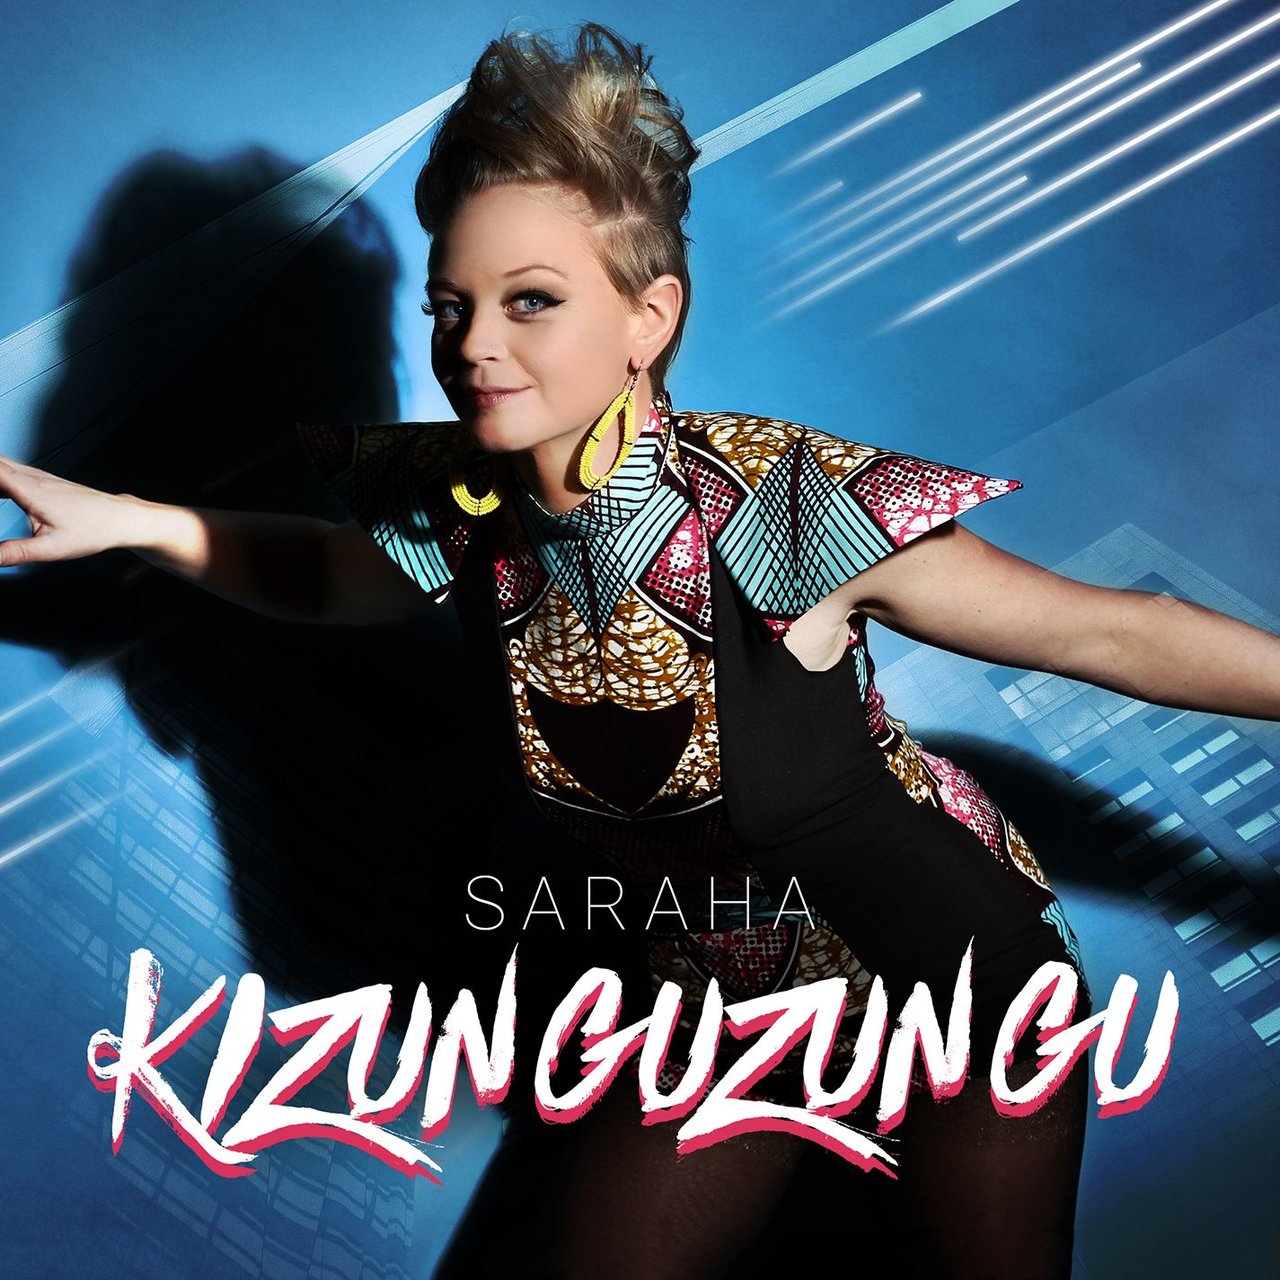 SaRaha — Kizunguzungu cover artwork